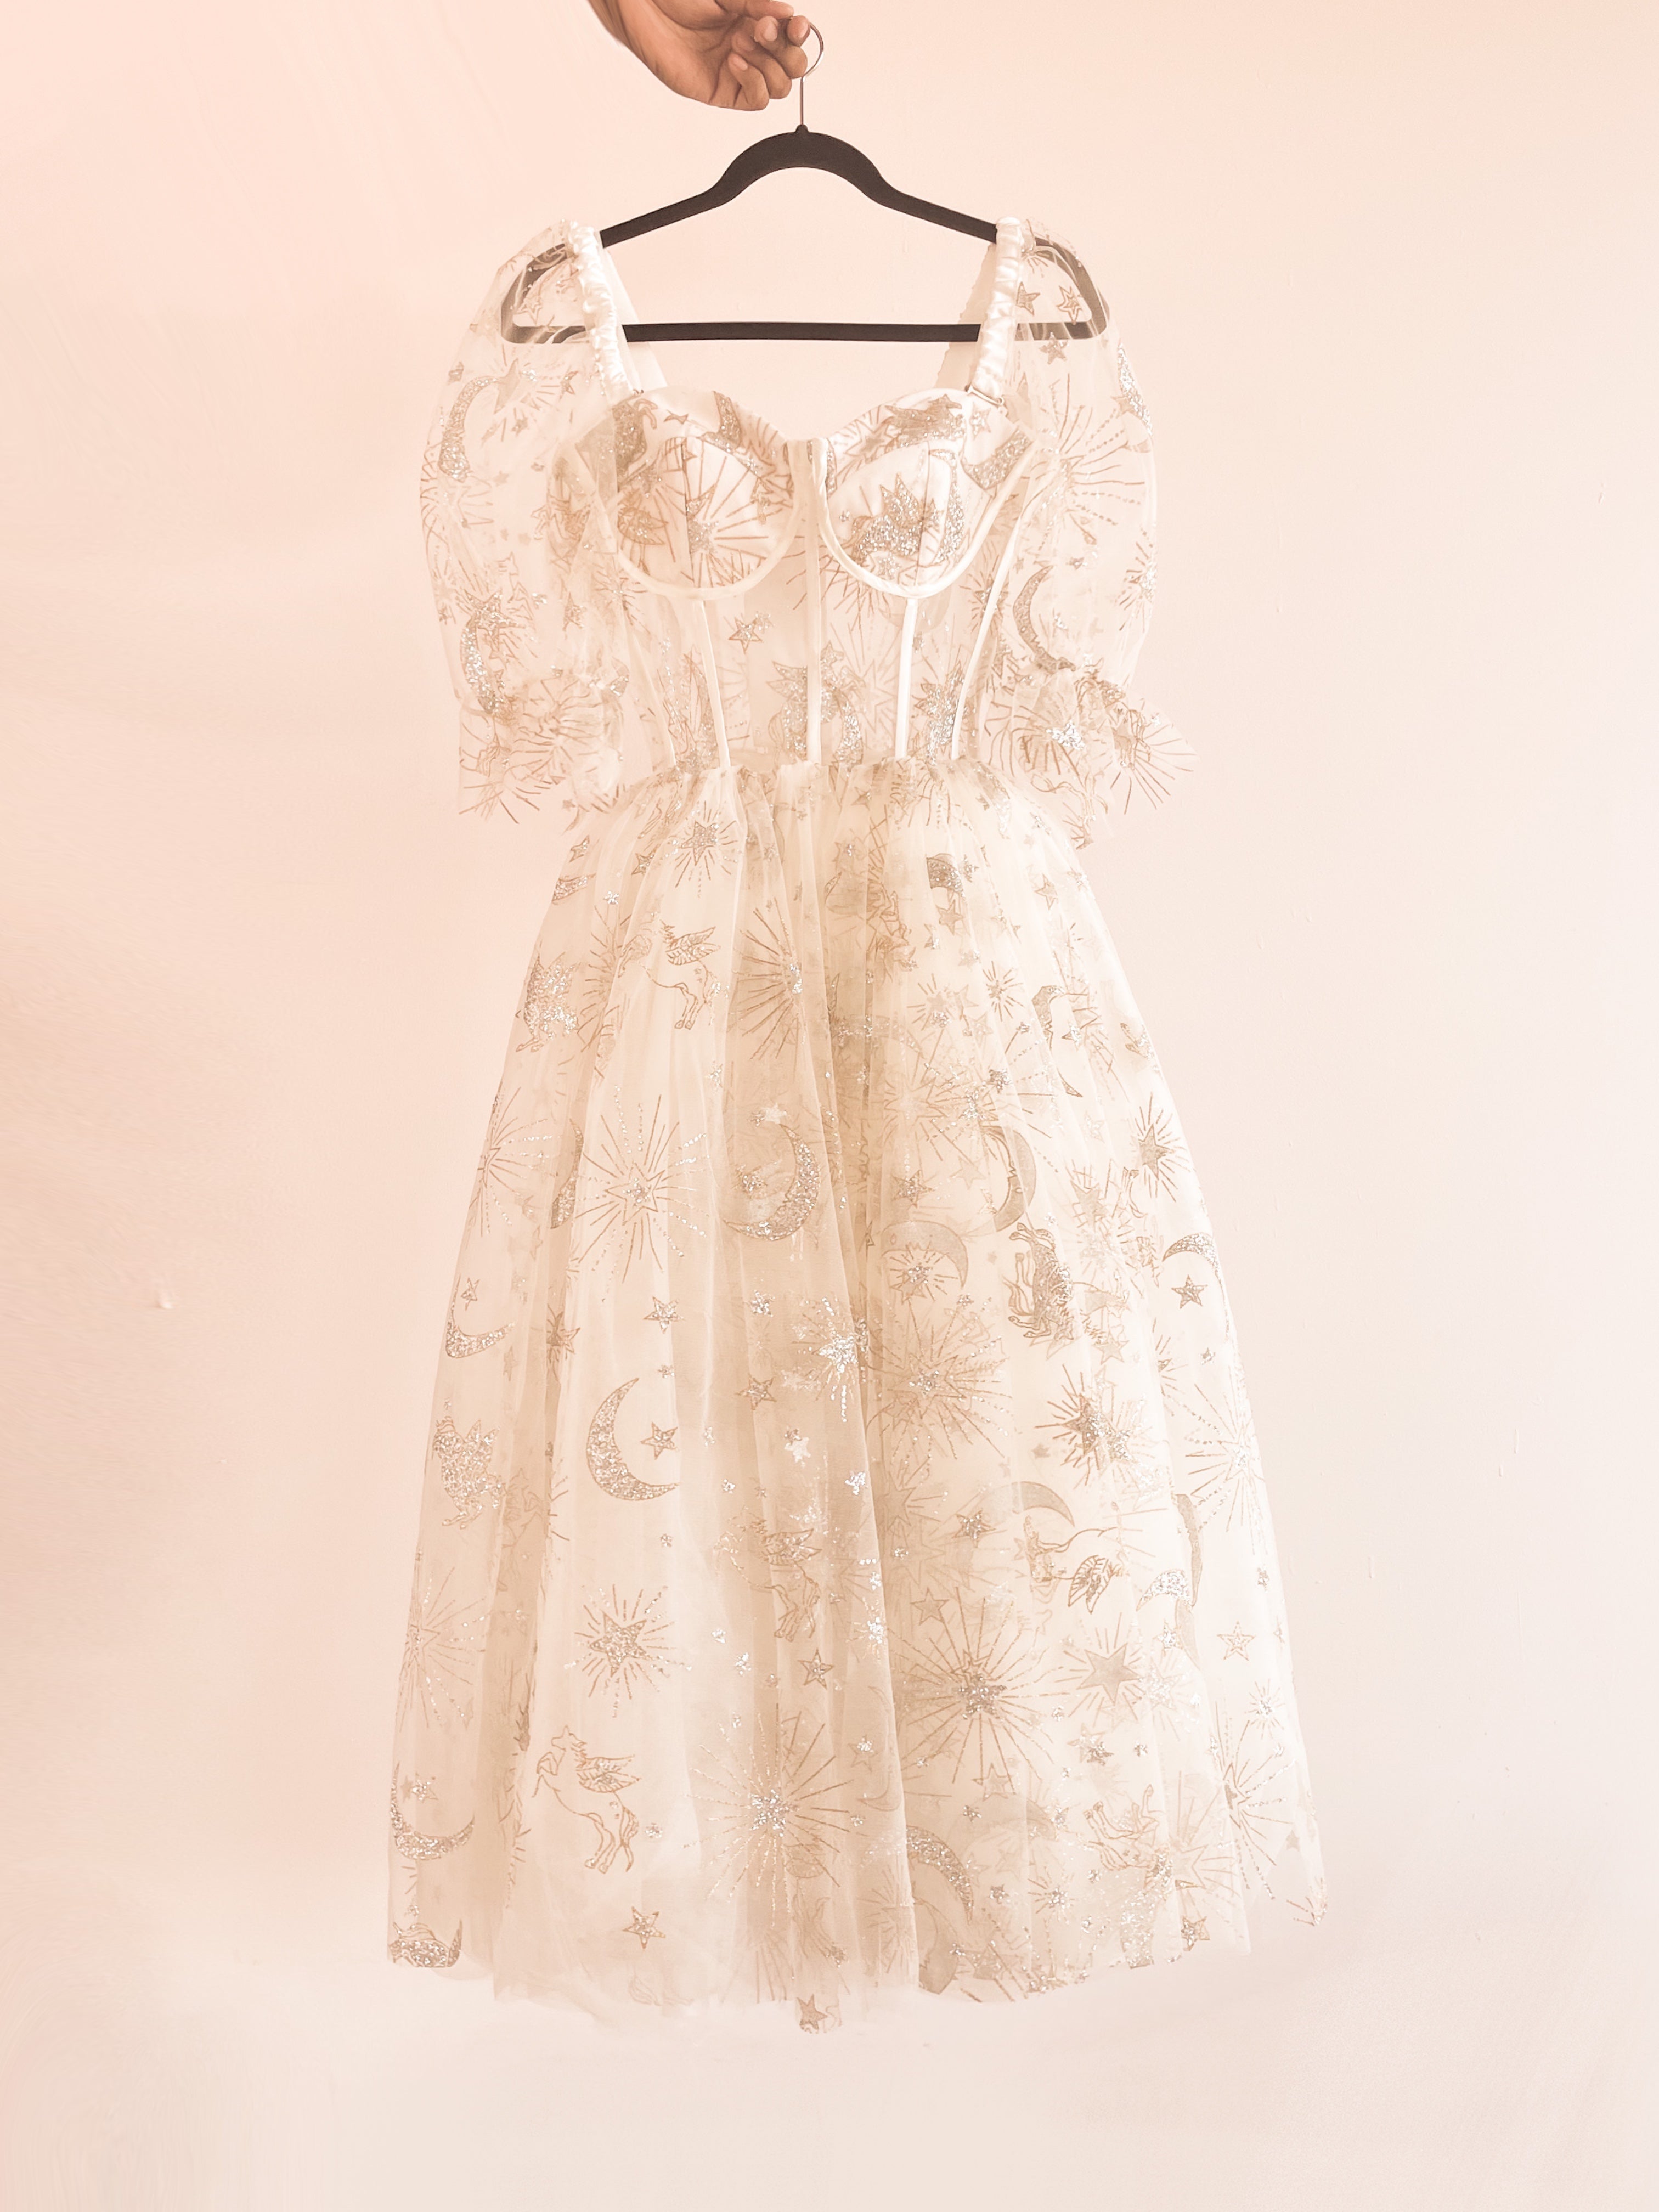 Constellation bridal dress